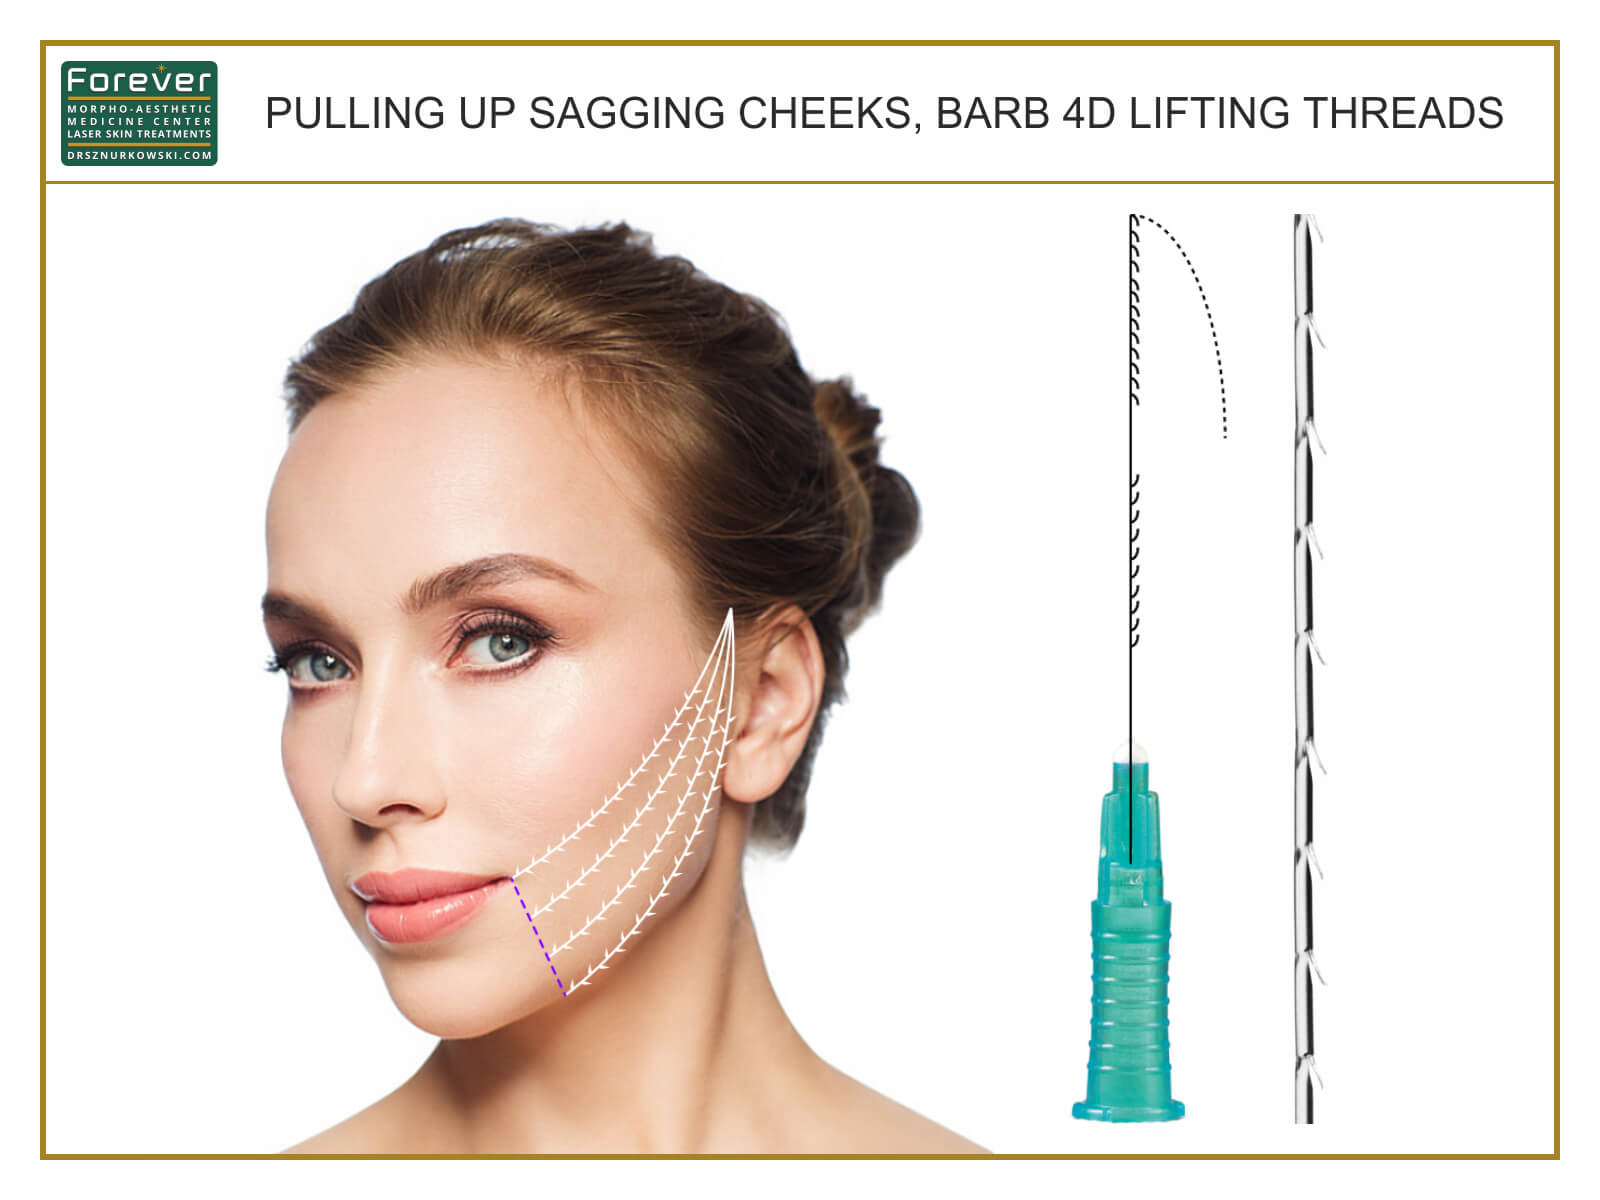 Pulling Up Sagging Cheeks, Barb 4D Lifting Threads (80x60) EN.jpg